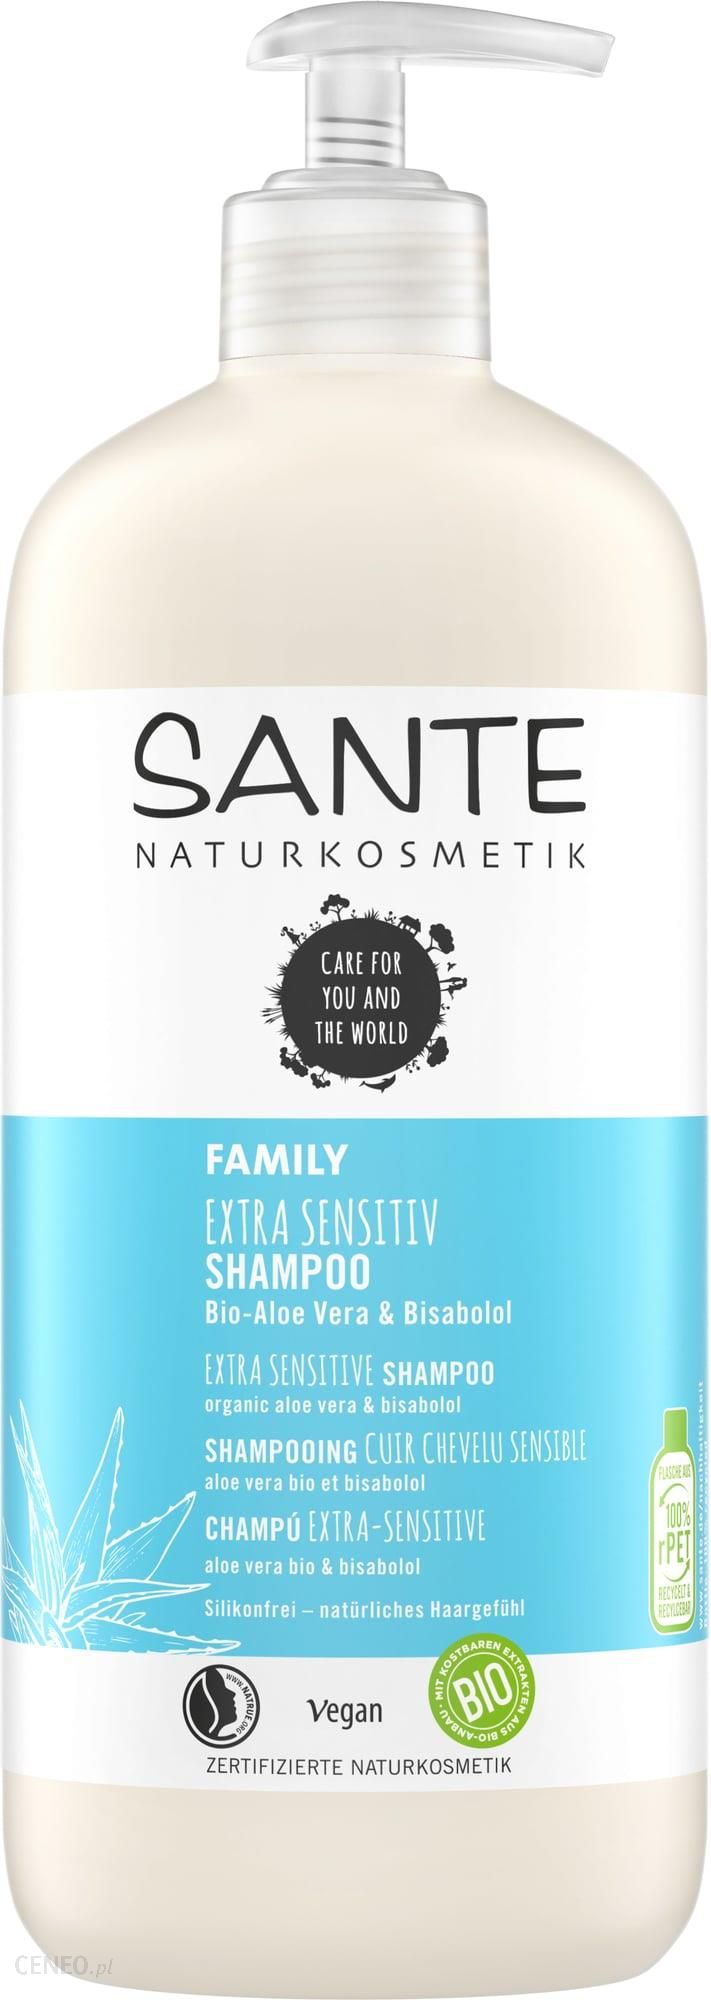 Sante Family Łagodny szampon z organicznym aloesem i bisabololem 500ml